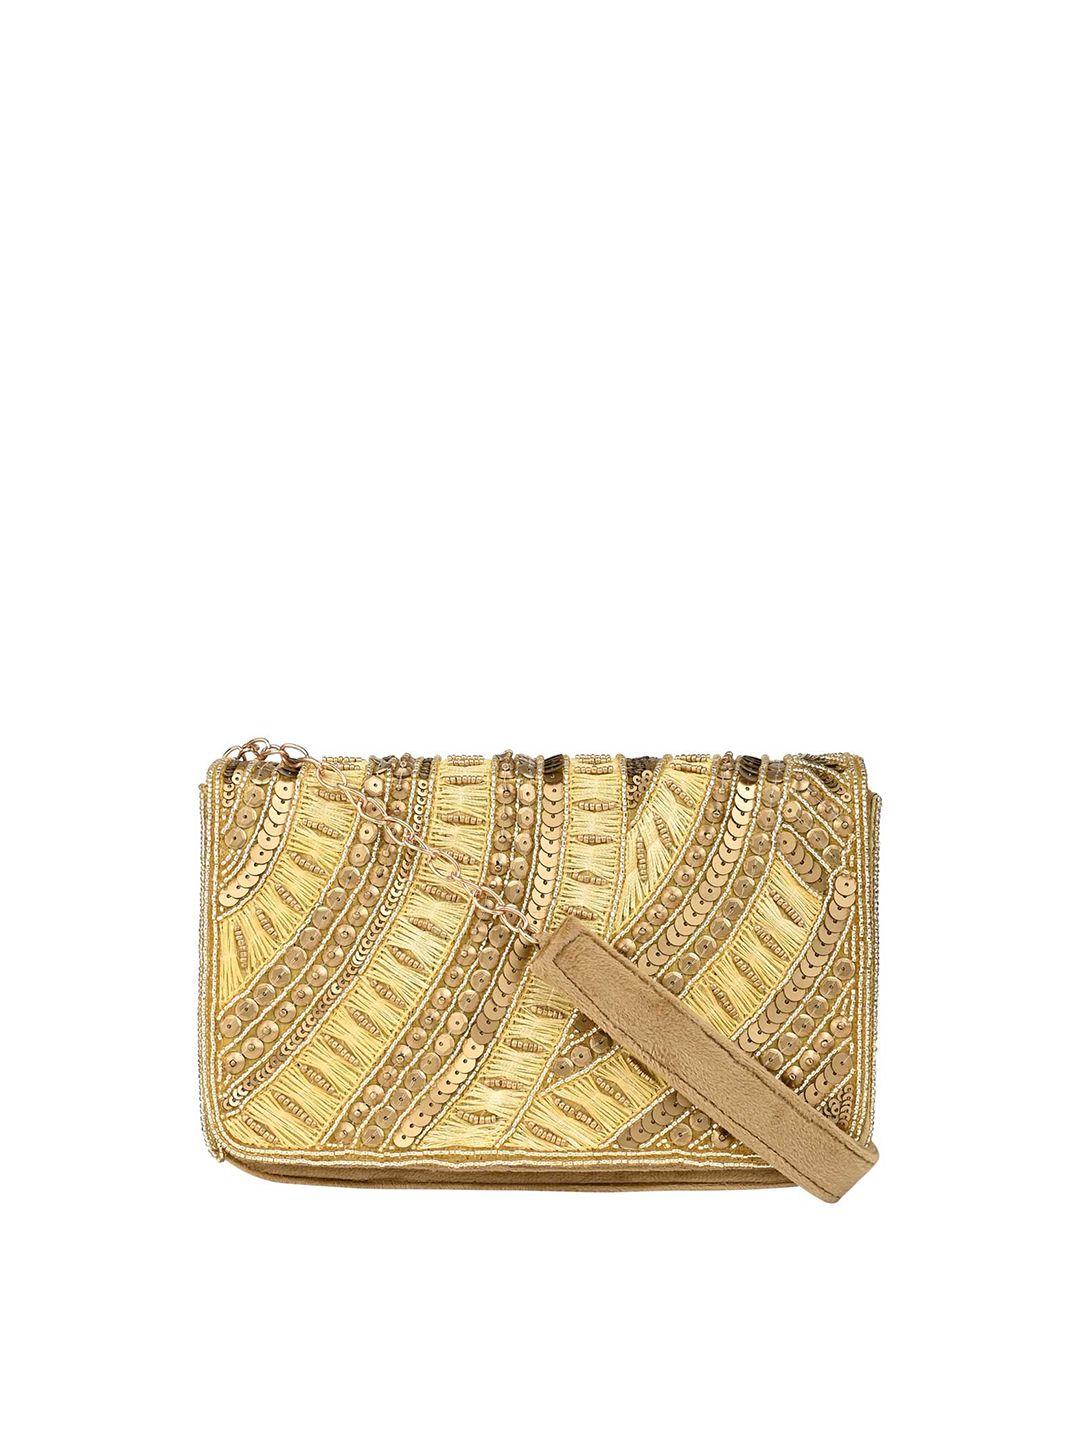 rocia embellished purse clutch